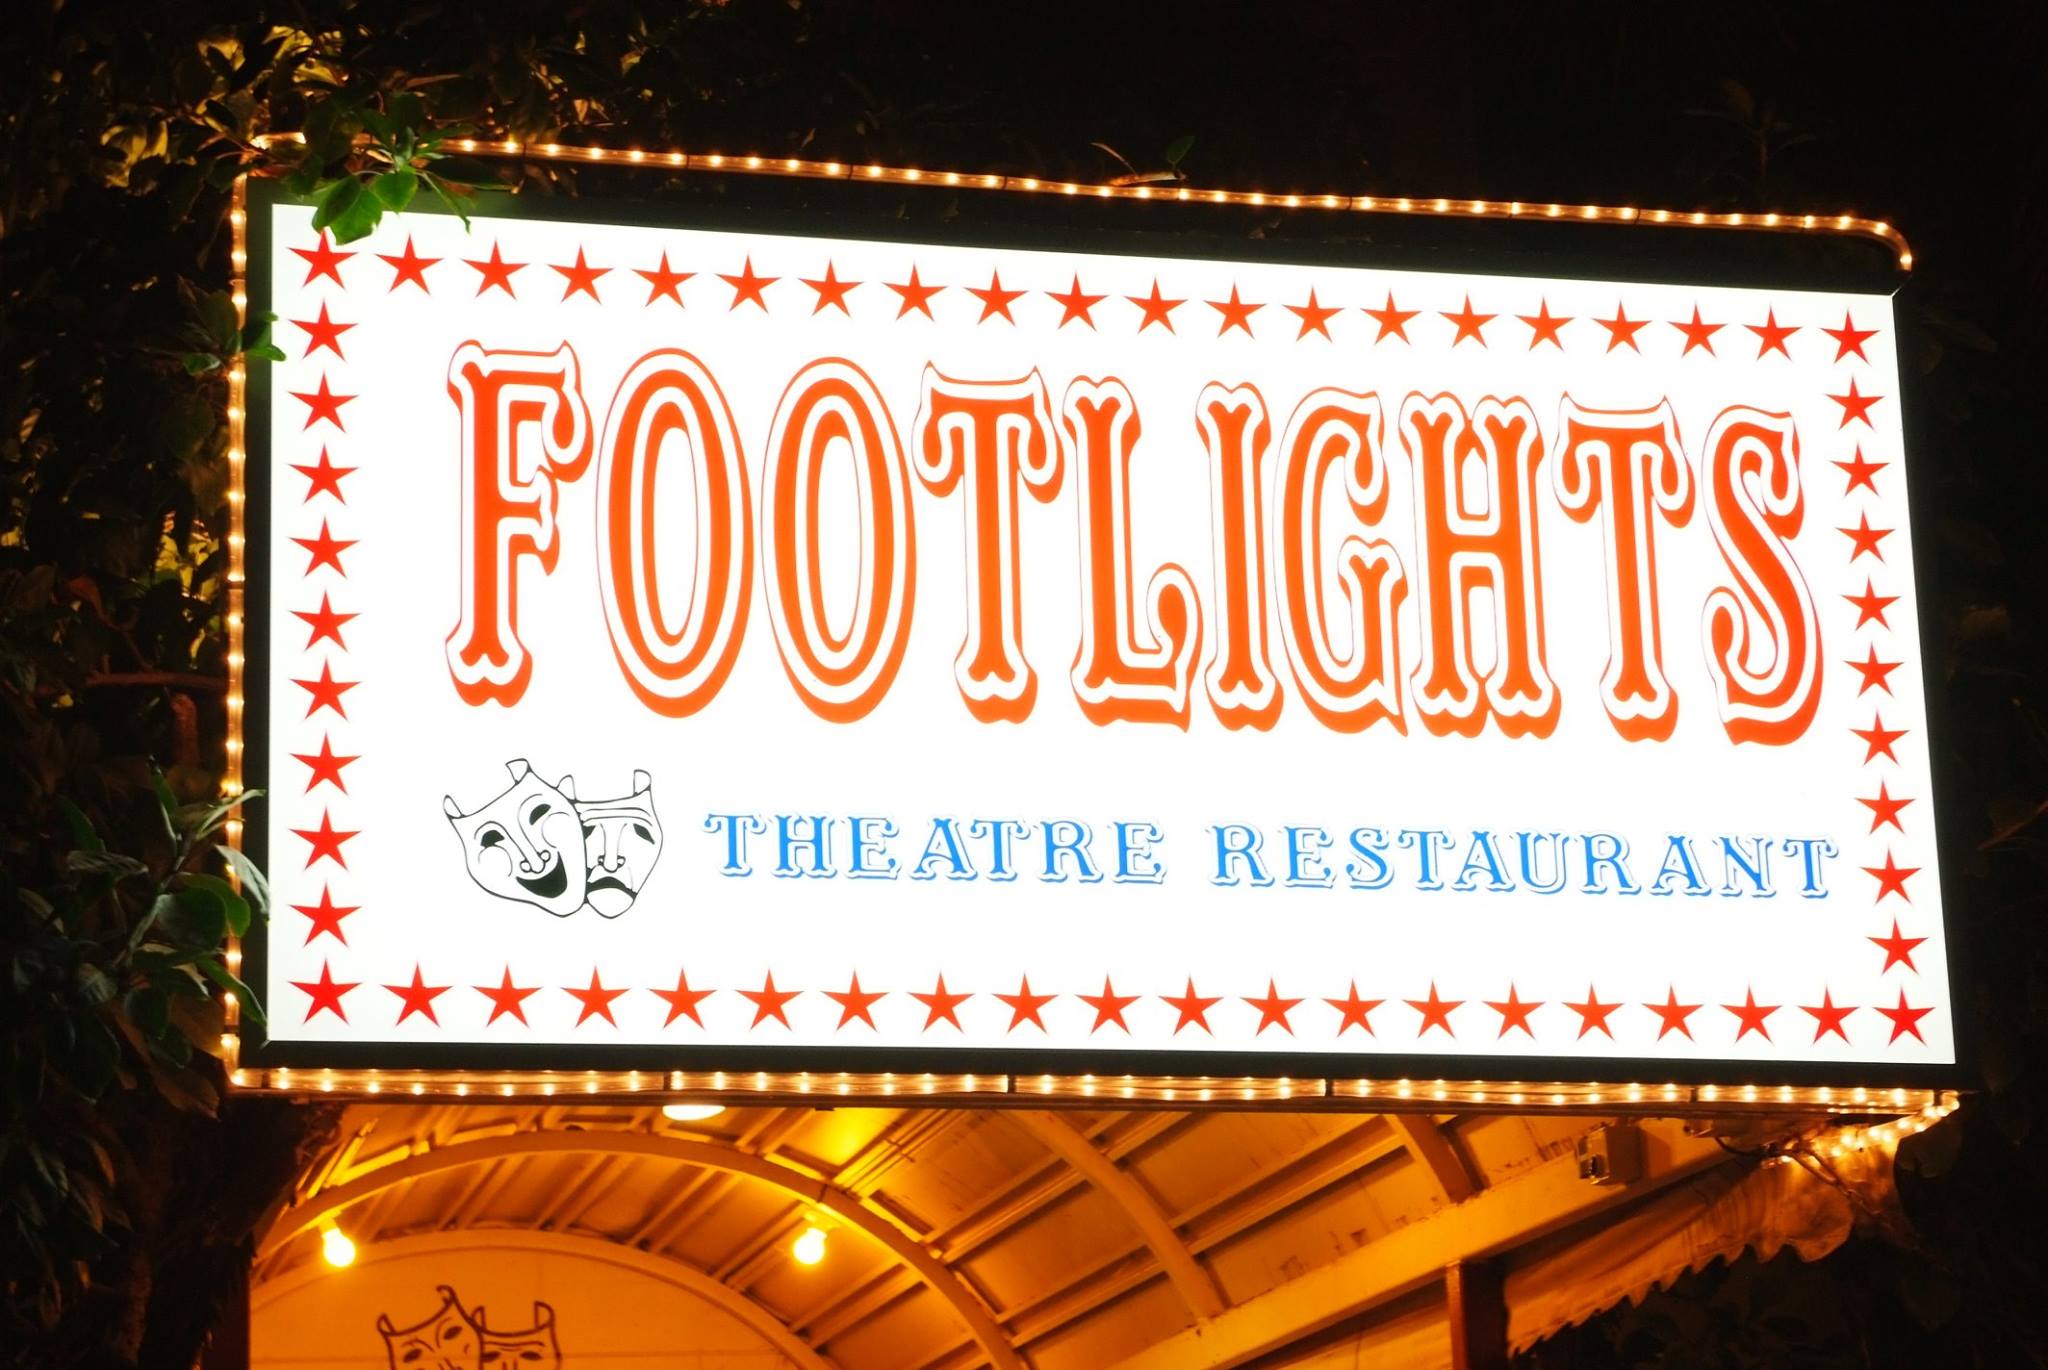 footlight theater michigan city